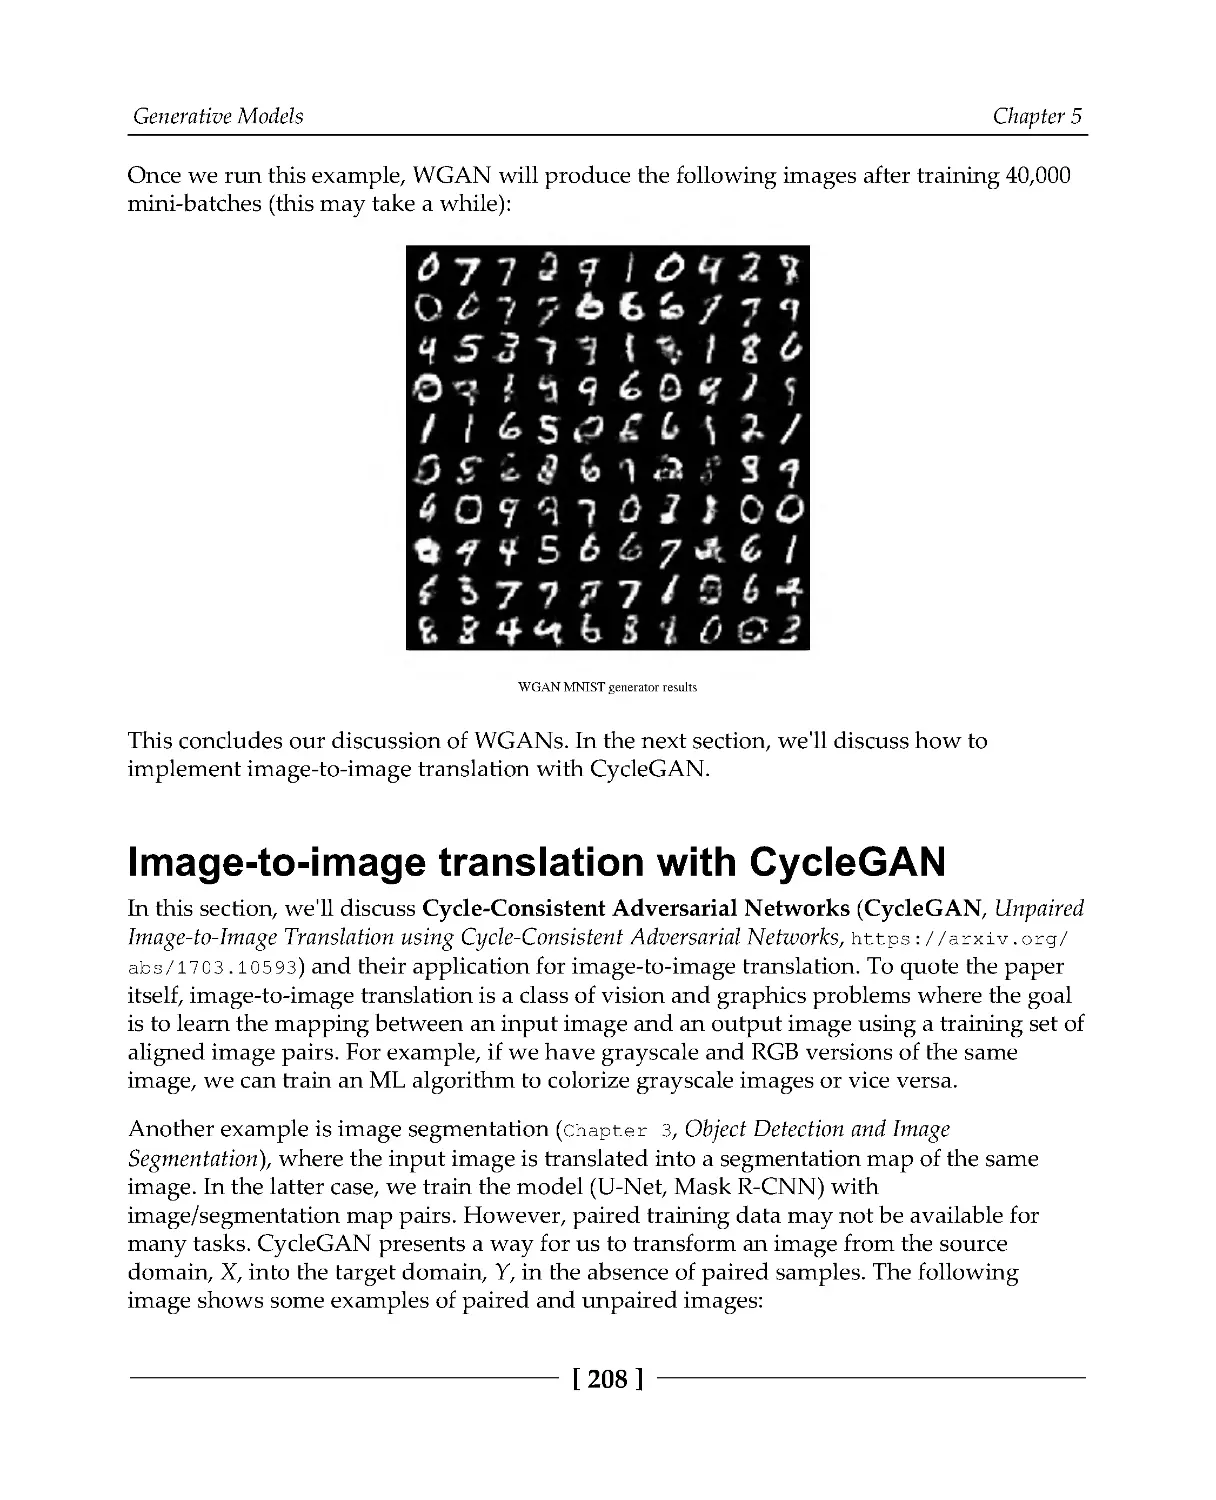 Image-to-image translation with CycleGAN